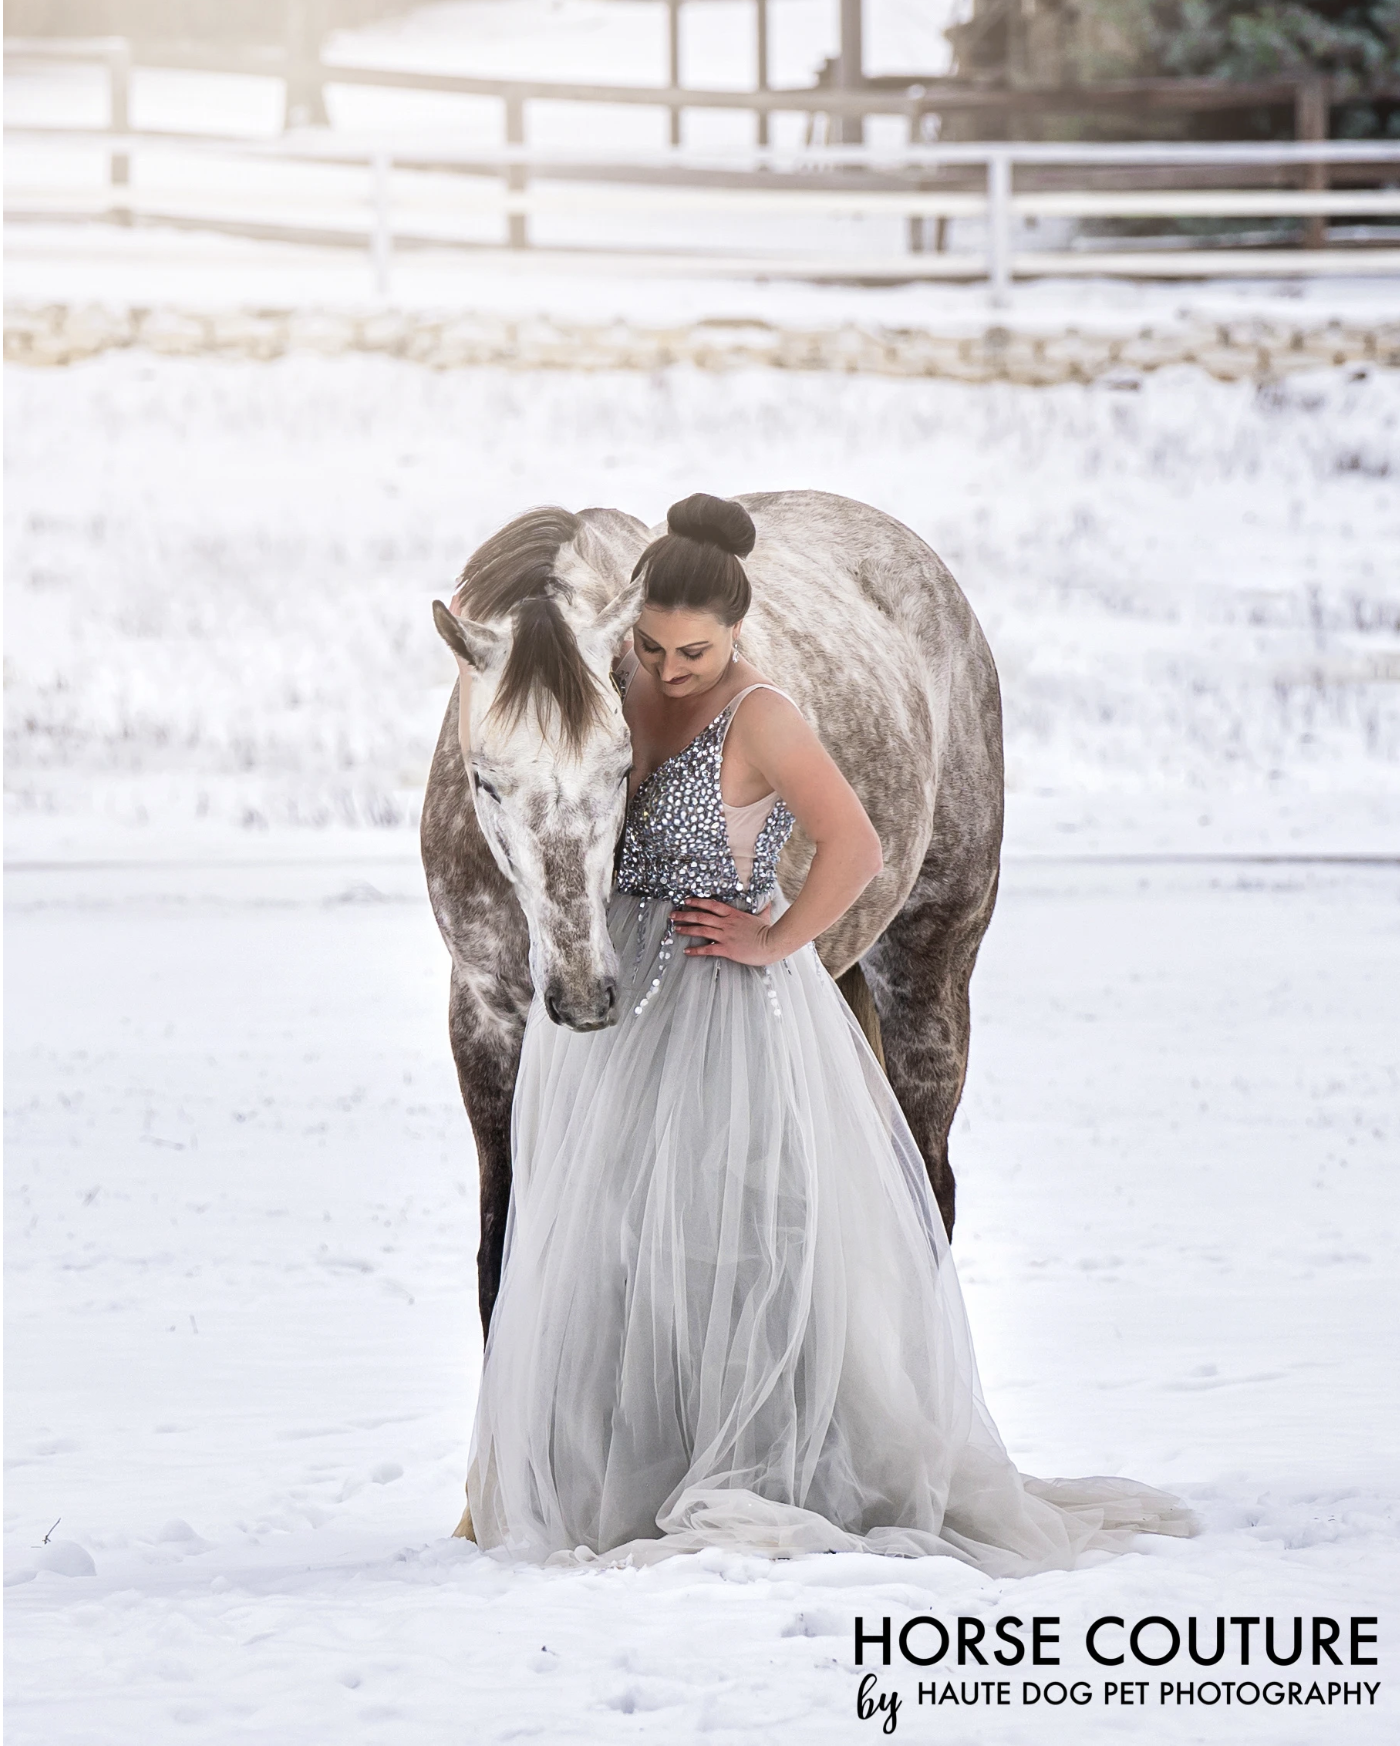 Woman wearing silver ballgown hugs dapple gray horse in the snow.